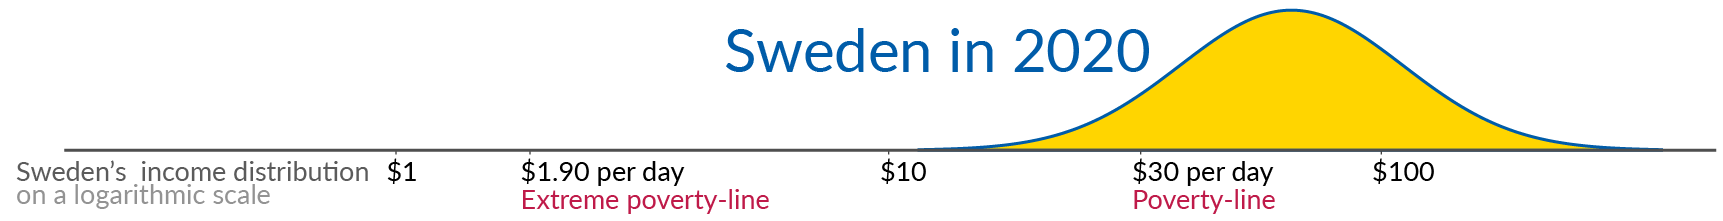 Sweden in 2020